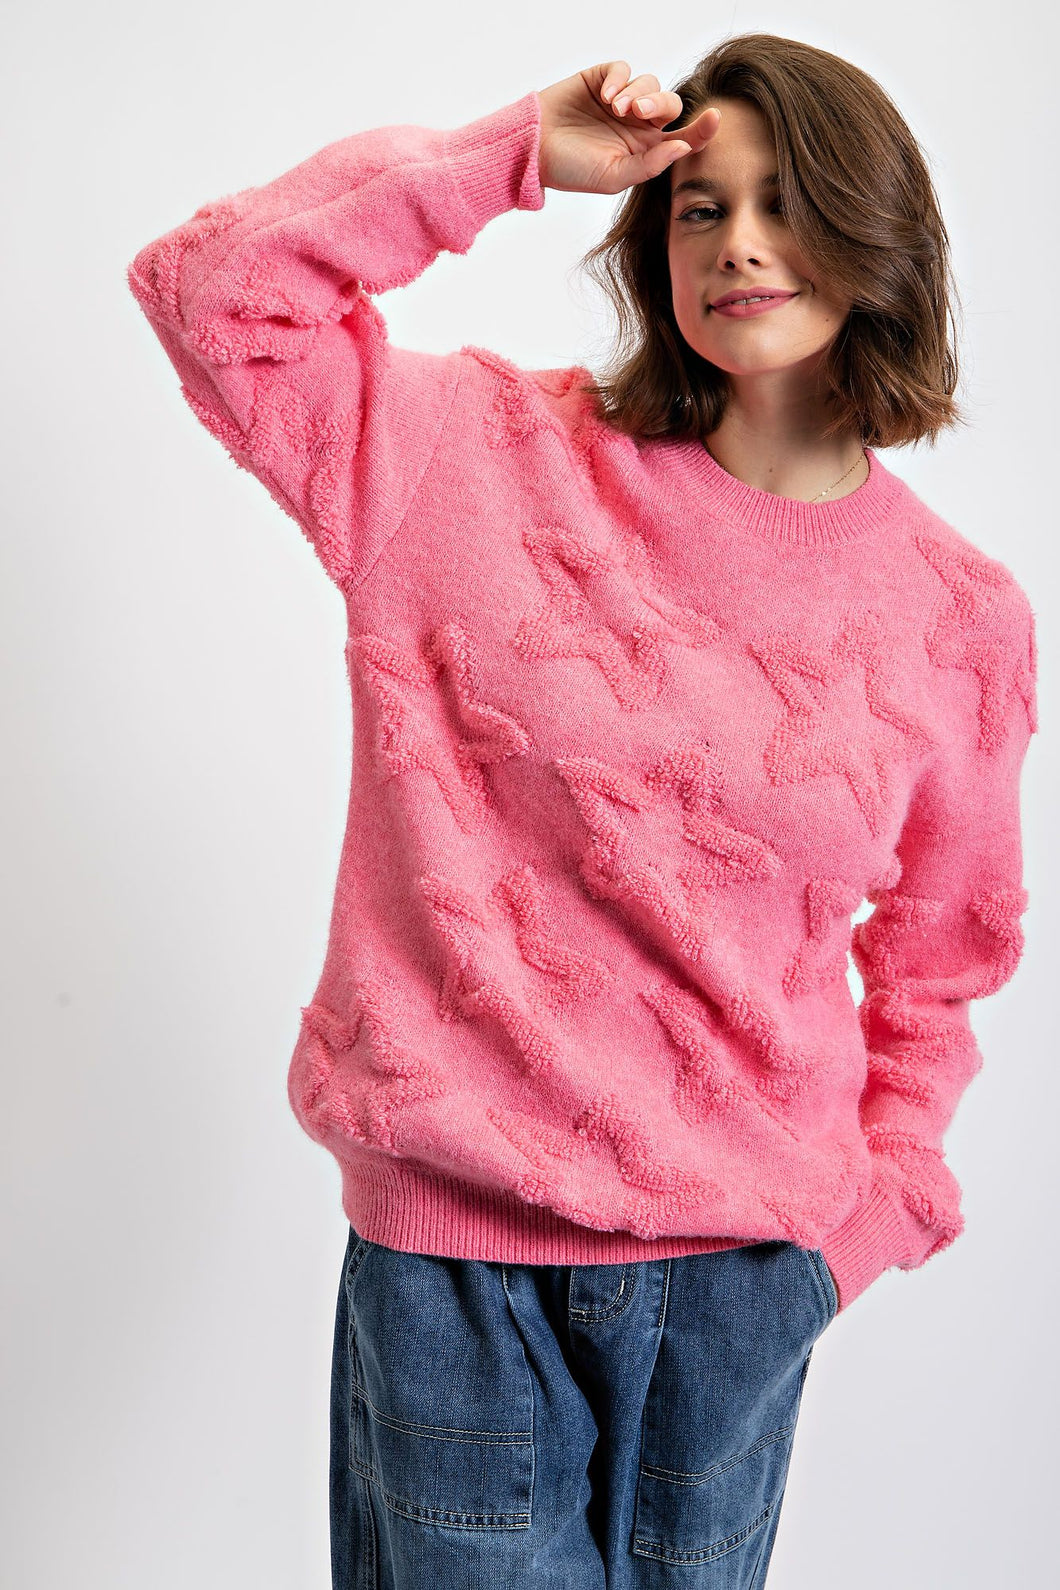 Strawberry Smoothie Sweater